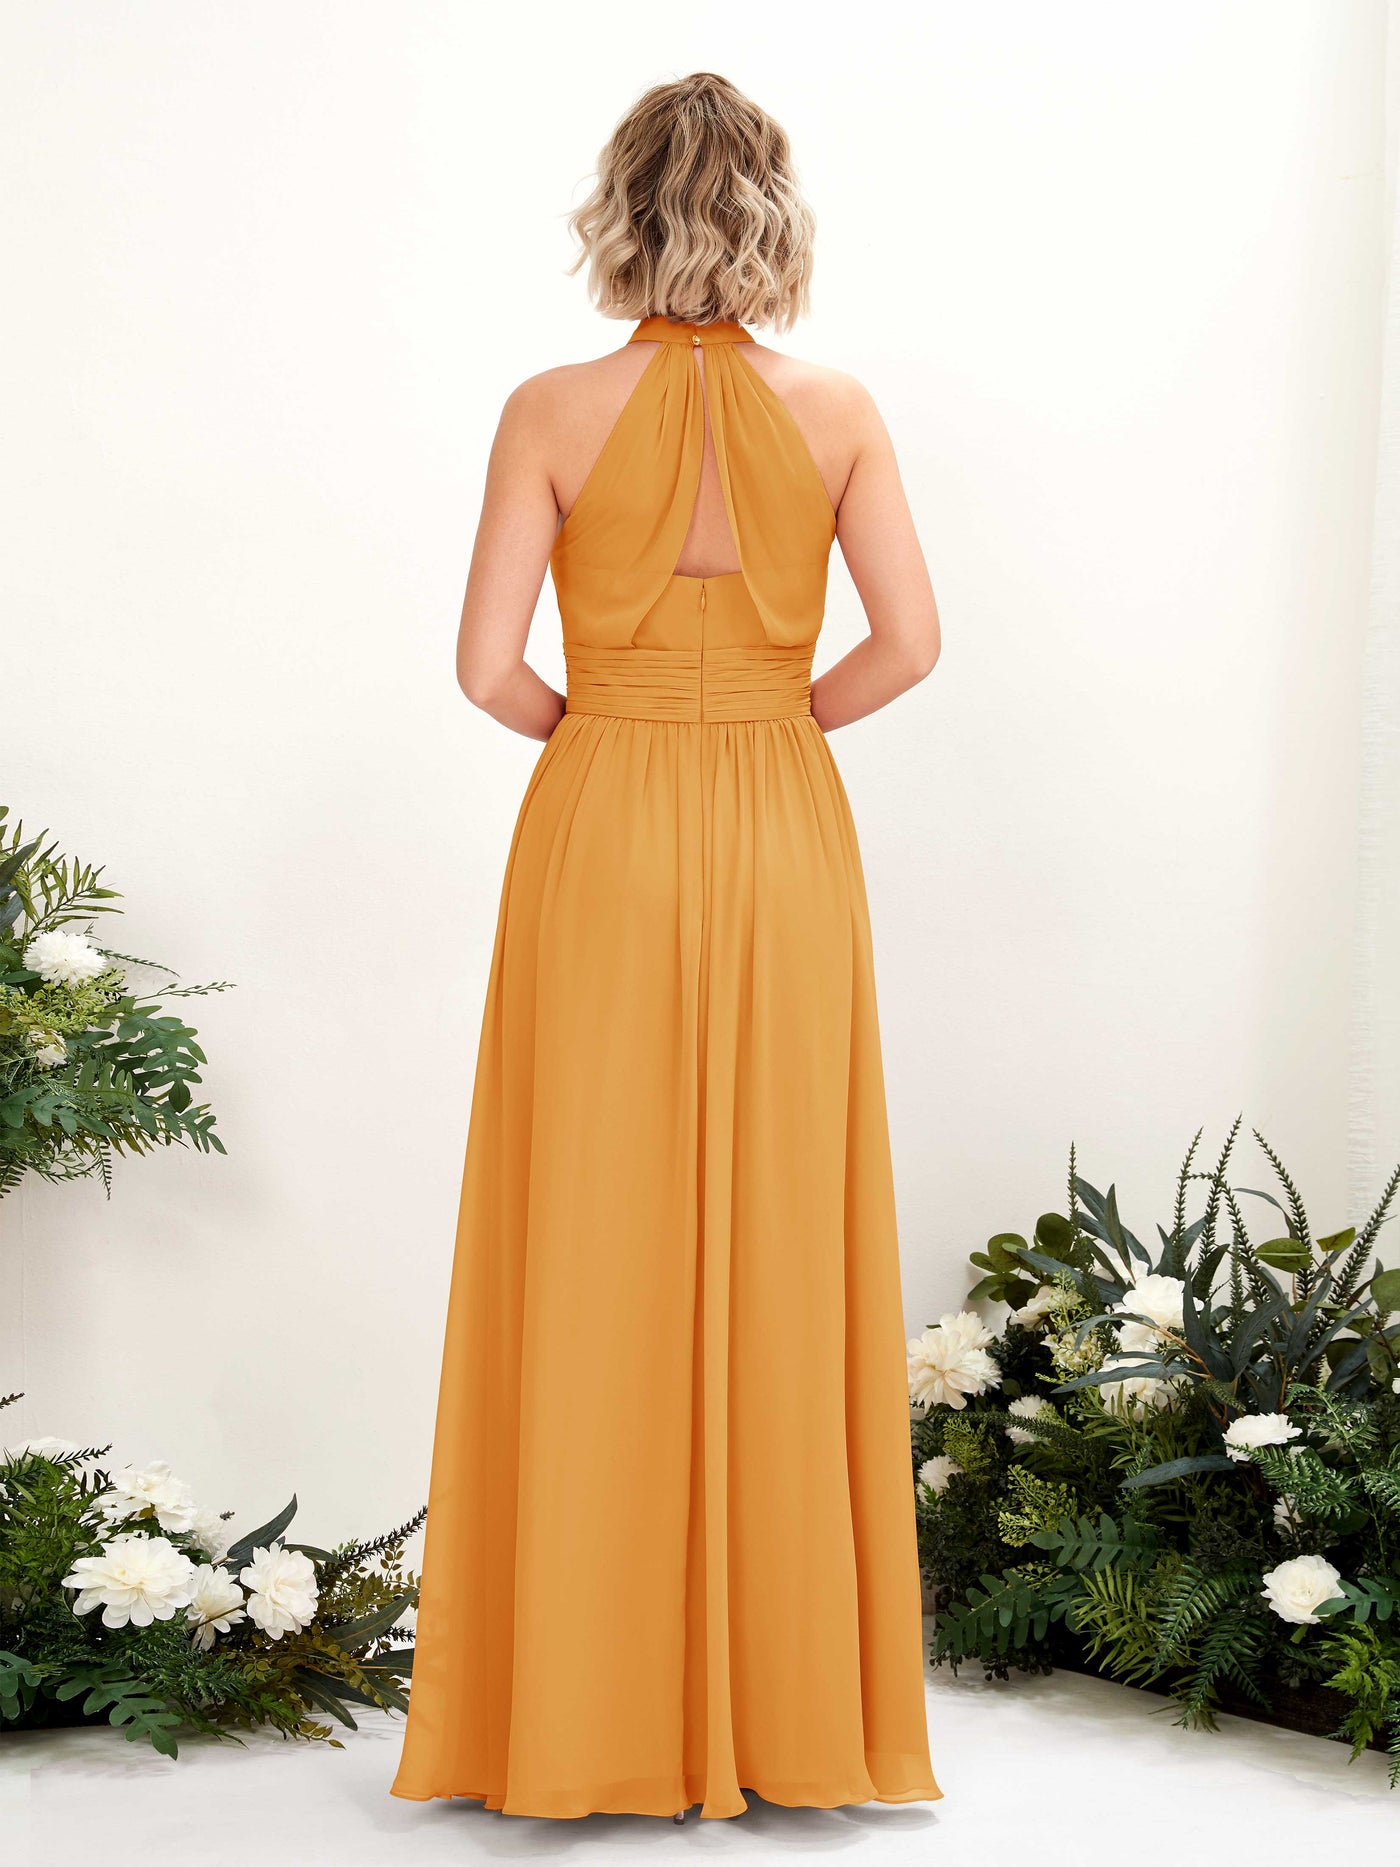 Mango Bridesmaid Dresses Bridesmaid Dress A-line Chiffon Halter Full Length Sleeveless Wedding Party Dress (81225302)#color_mango